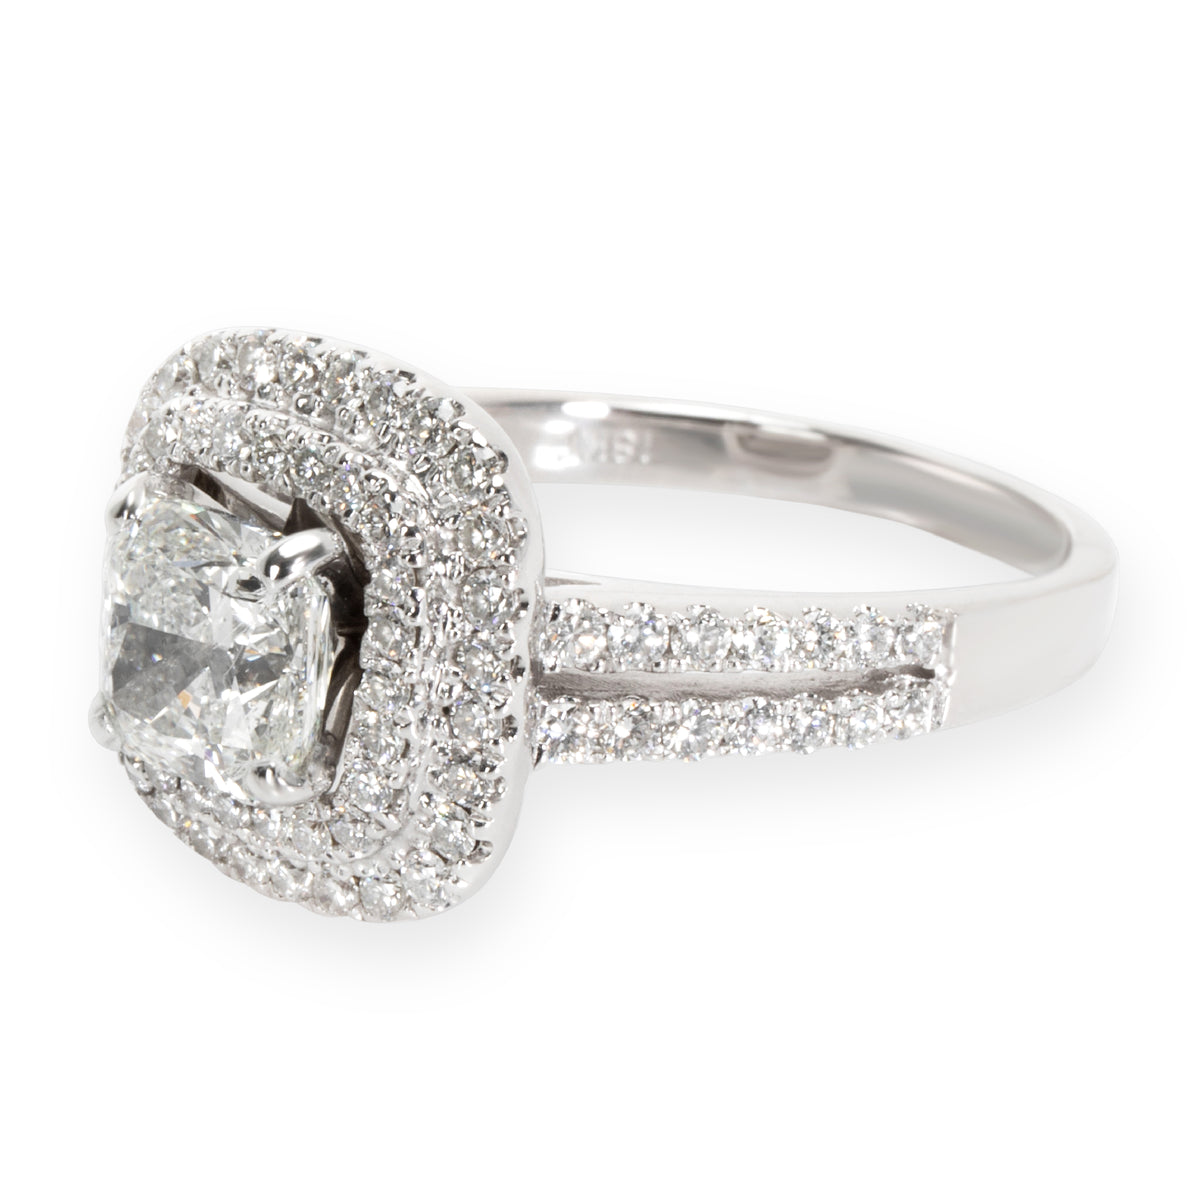 Scott K Cushion Diamond Halo Engagement Ring in 18K White Gold 2.25 CTW